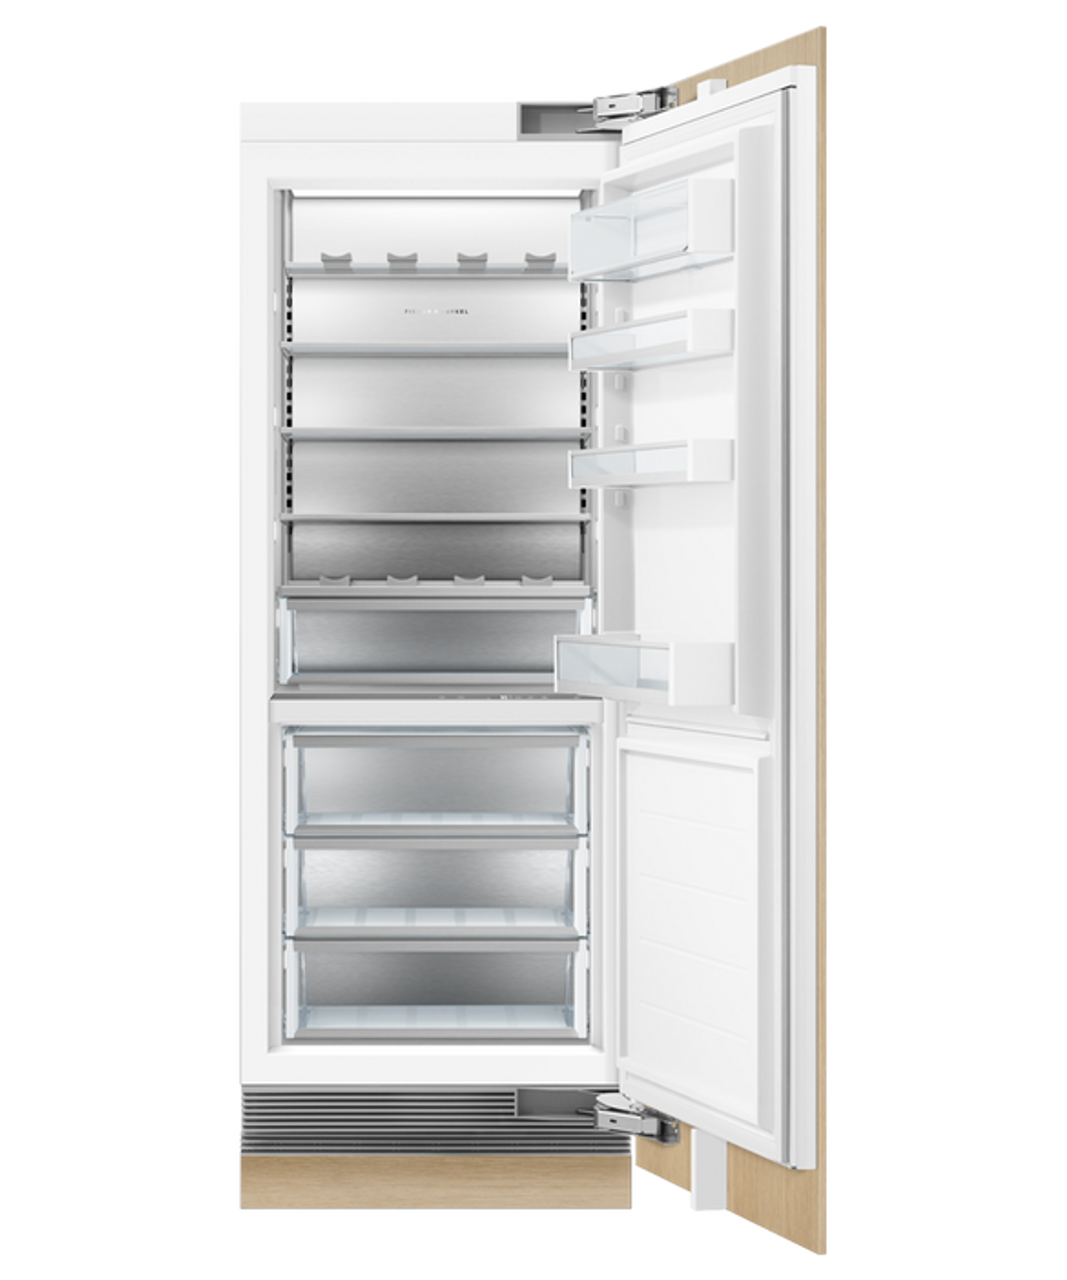 RS7621SRHK1 - 76cm Integrated Column Refrigerator with Water (RH Hinge)